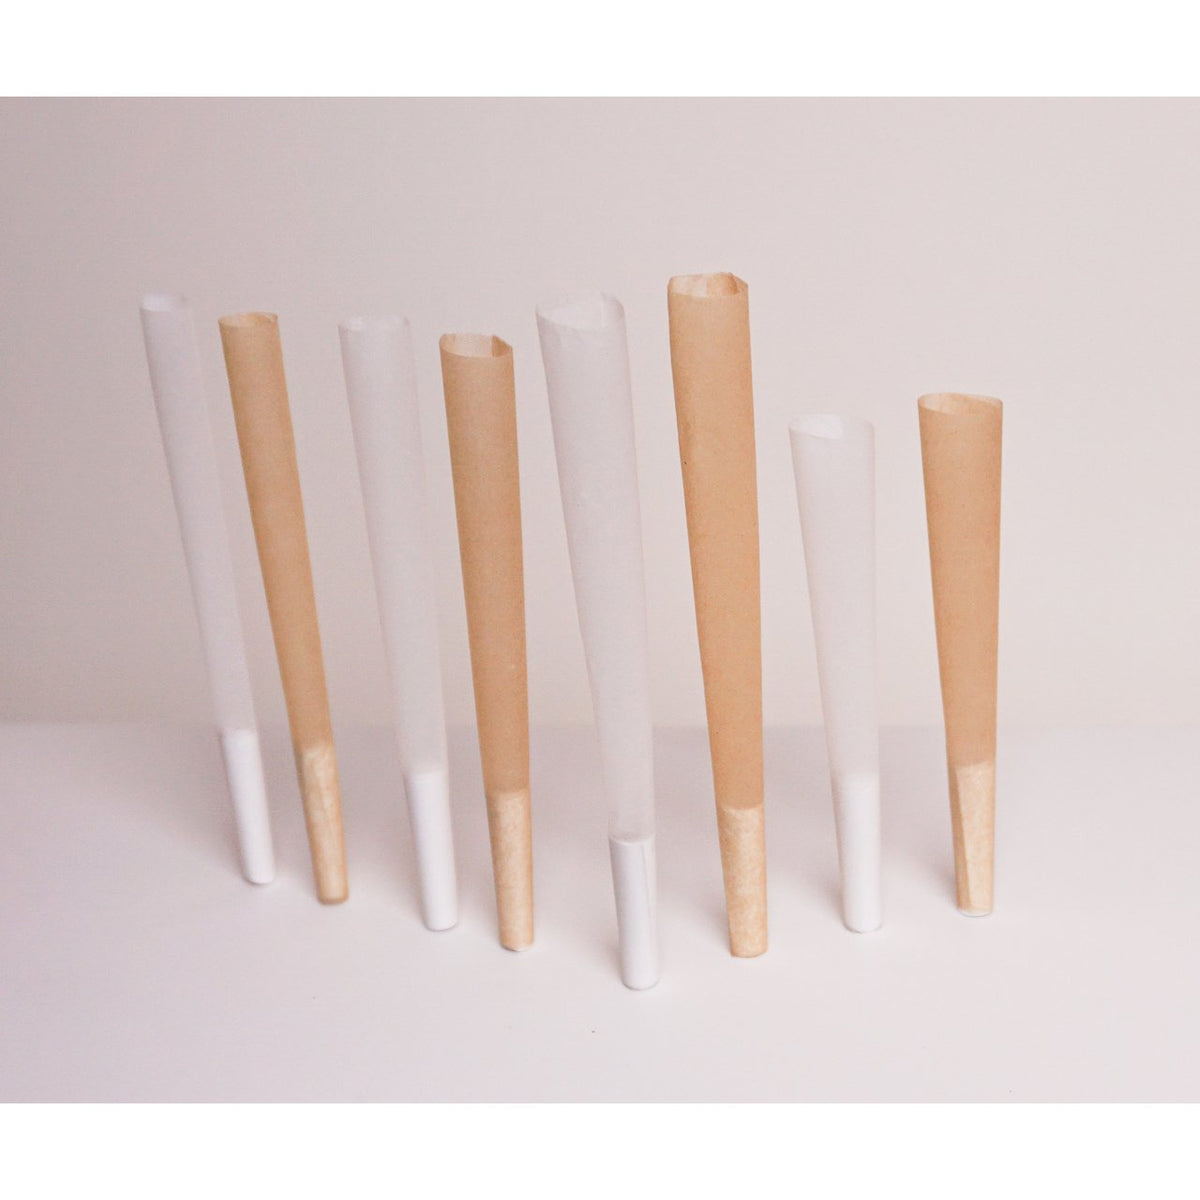 Custom Cones 98mm Pre-Rolled Cones - Refined White [800 Cones per Box]